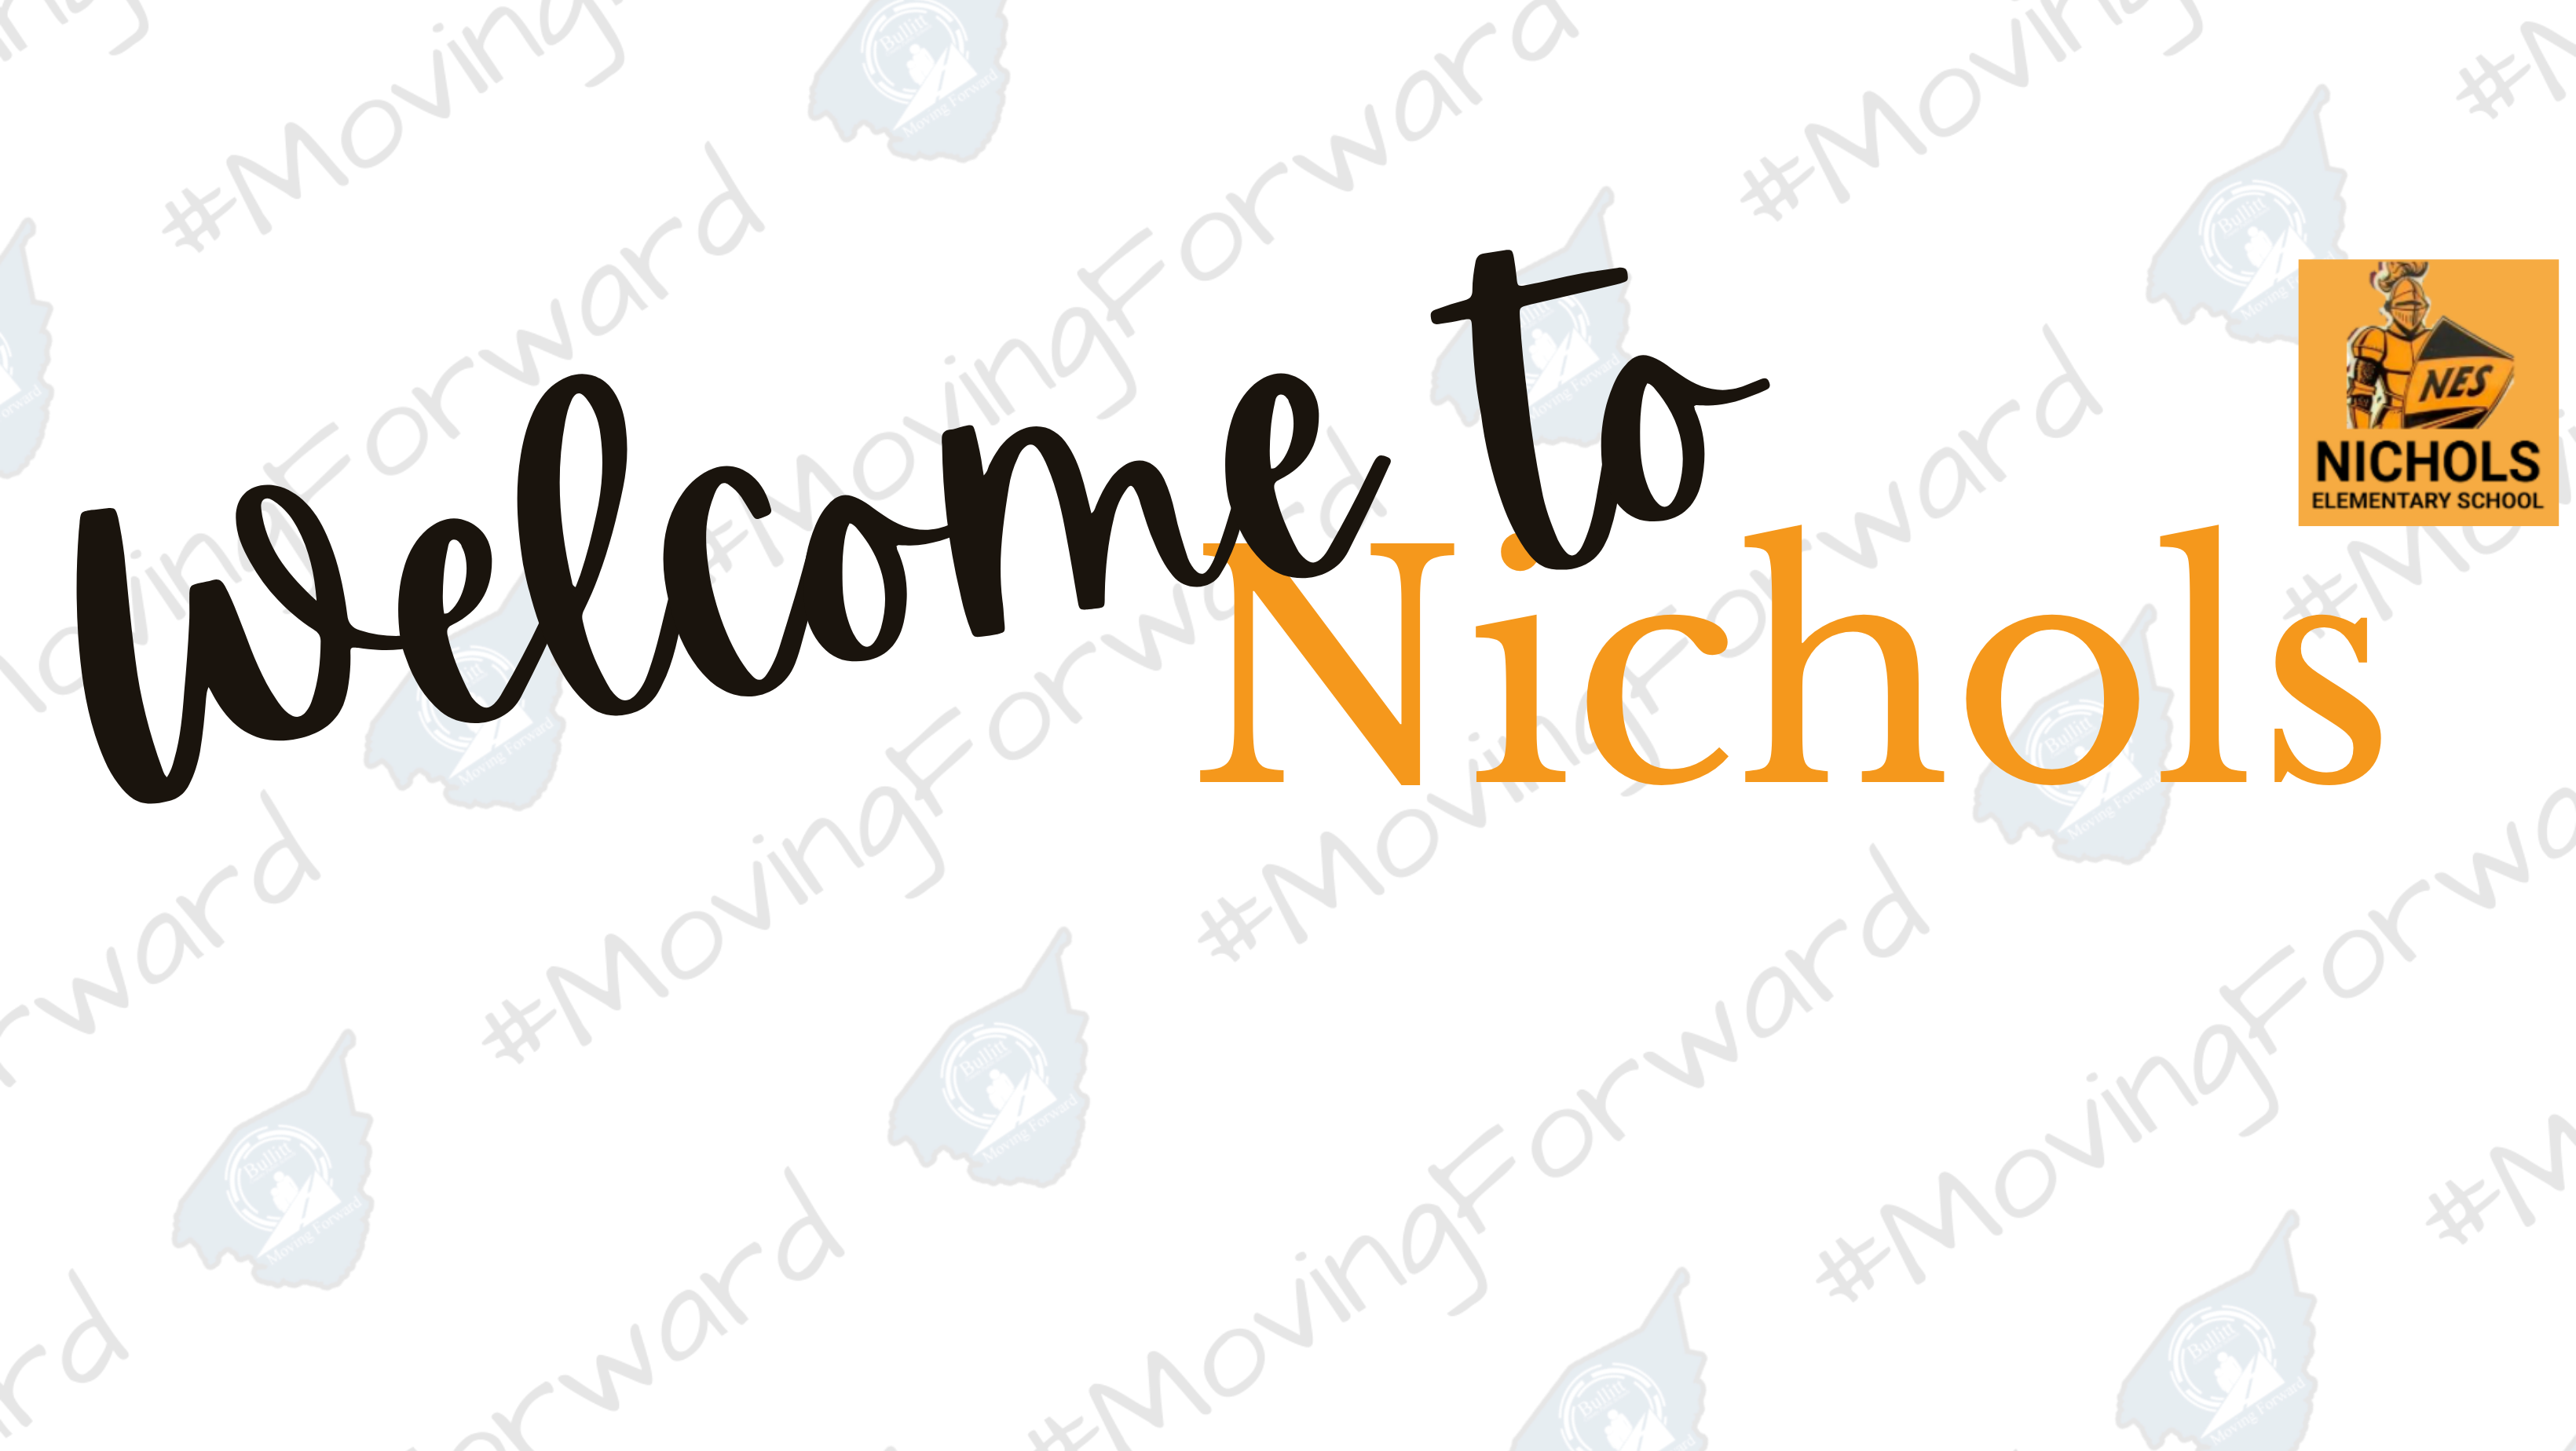 Welcome to Nichols